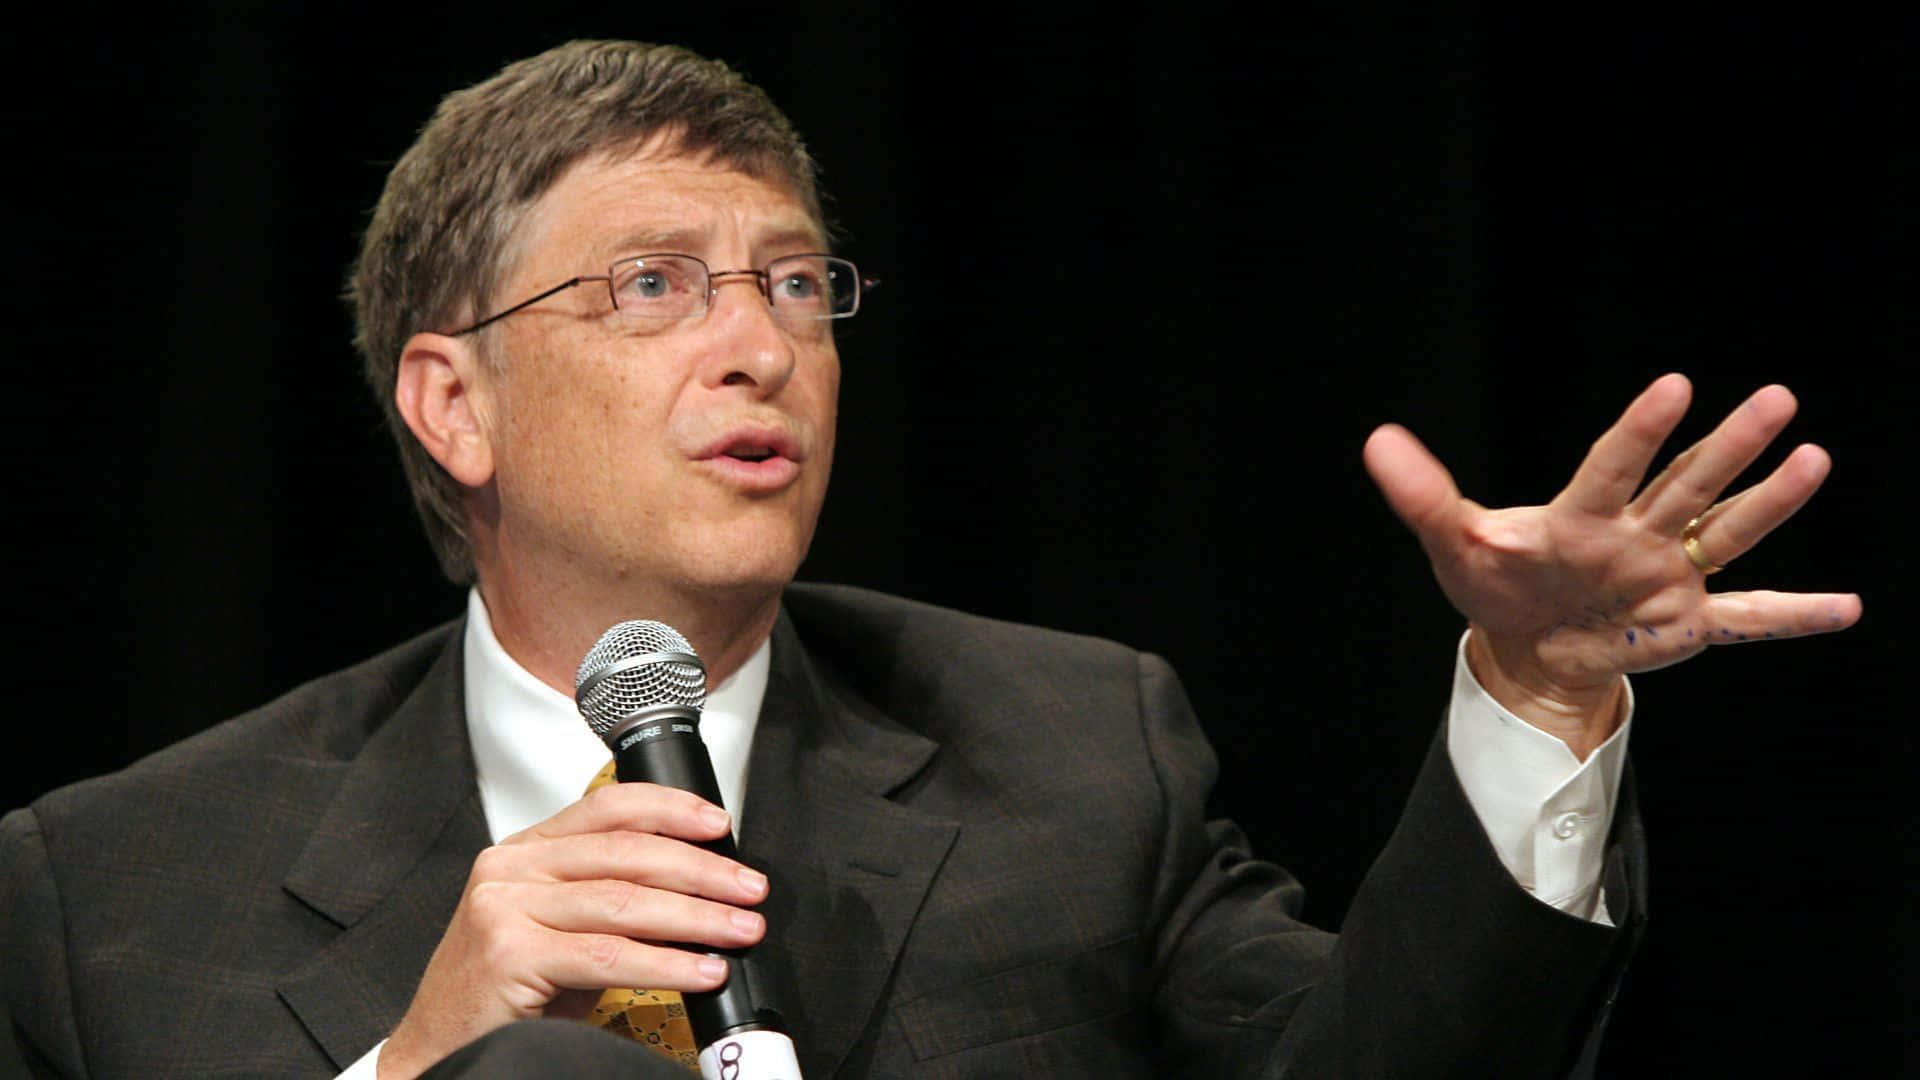 Bill Gates, Microsoft co-founder